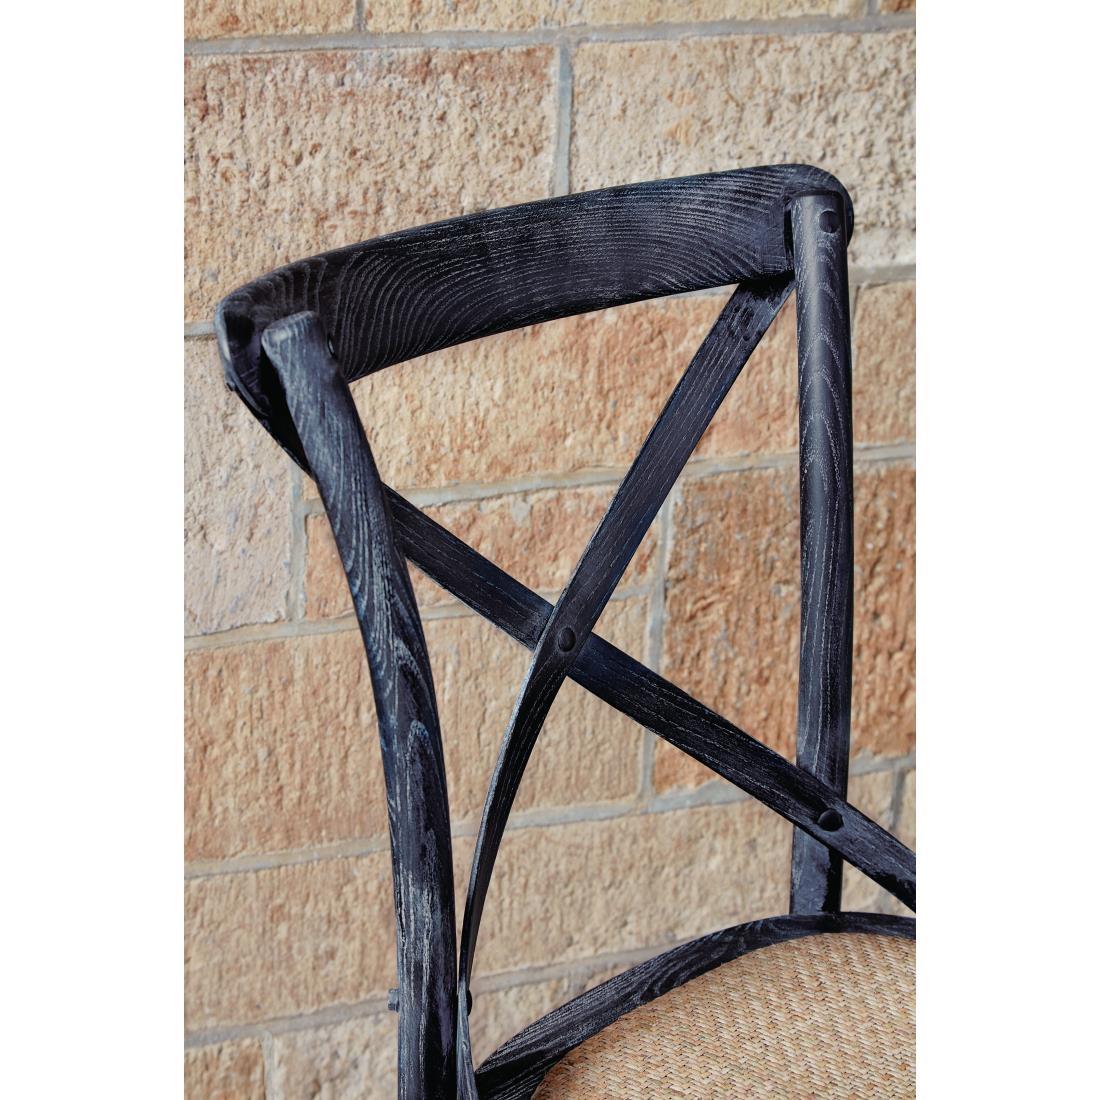 GG654 - Bolero Wooden Dining Chair with Cross Backrest Black Wash Finish (Box 2) - GG654  - 9